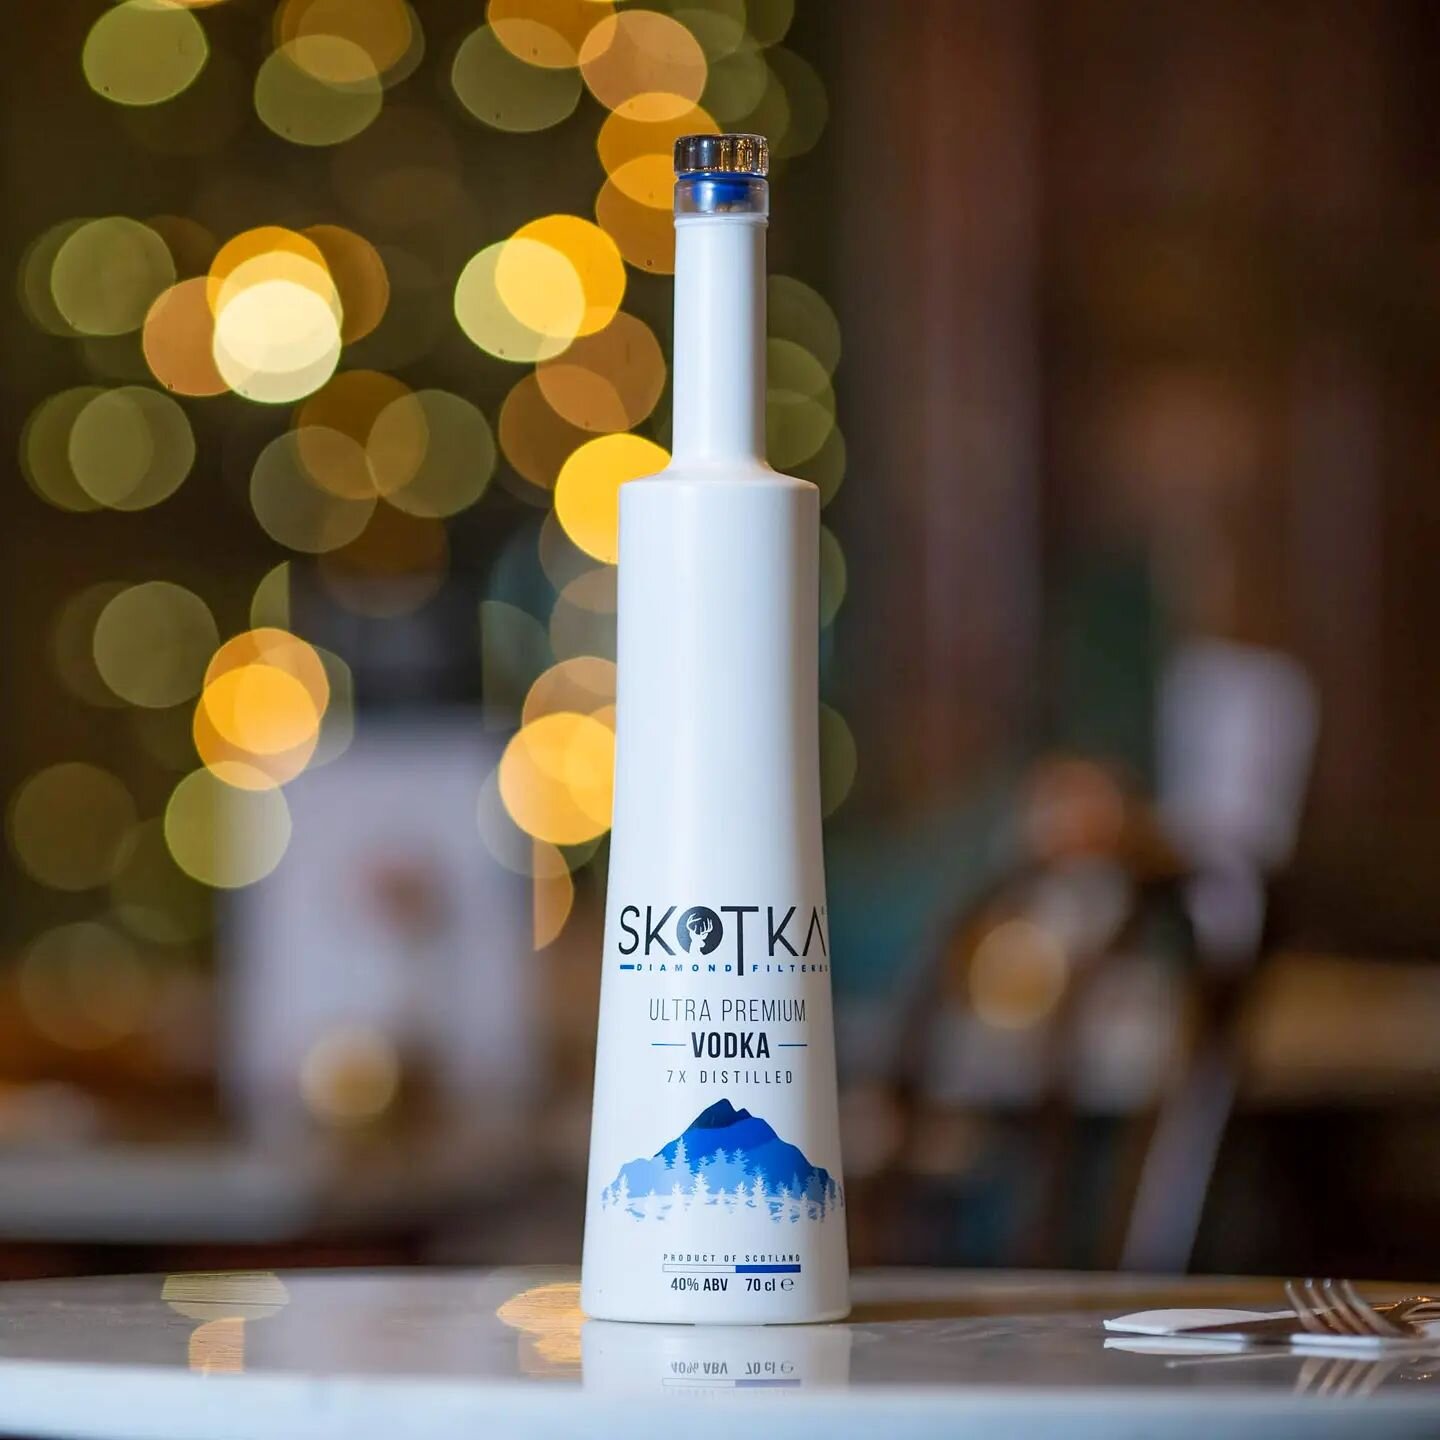 The bottles design has a fair bit of presence about it, wouldn't you agree? 

▫️
▫️
#vodka #vodkagram #vodkalovers #vodkainscotland #scotlandvodka #scottishvodka #bottledesign #premiumvodka #luxuryvodka #vodkagift #madeinscotland #skotka #skotkavodka